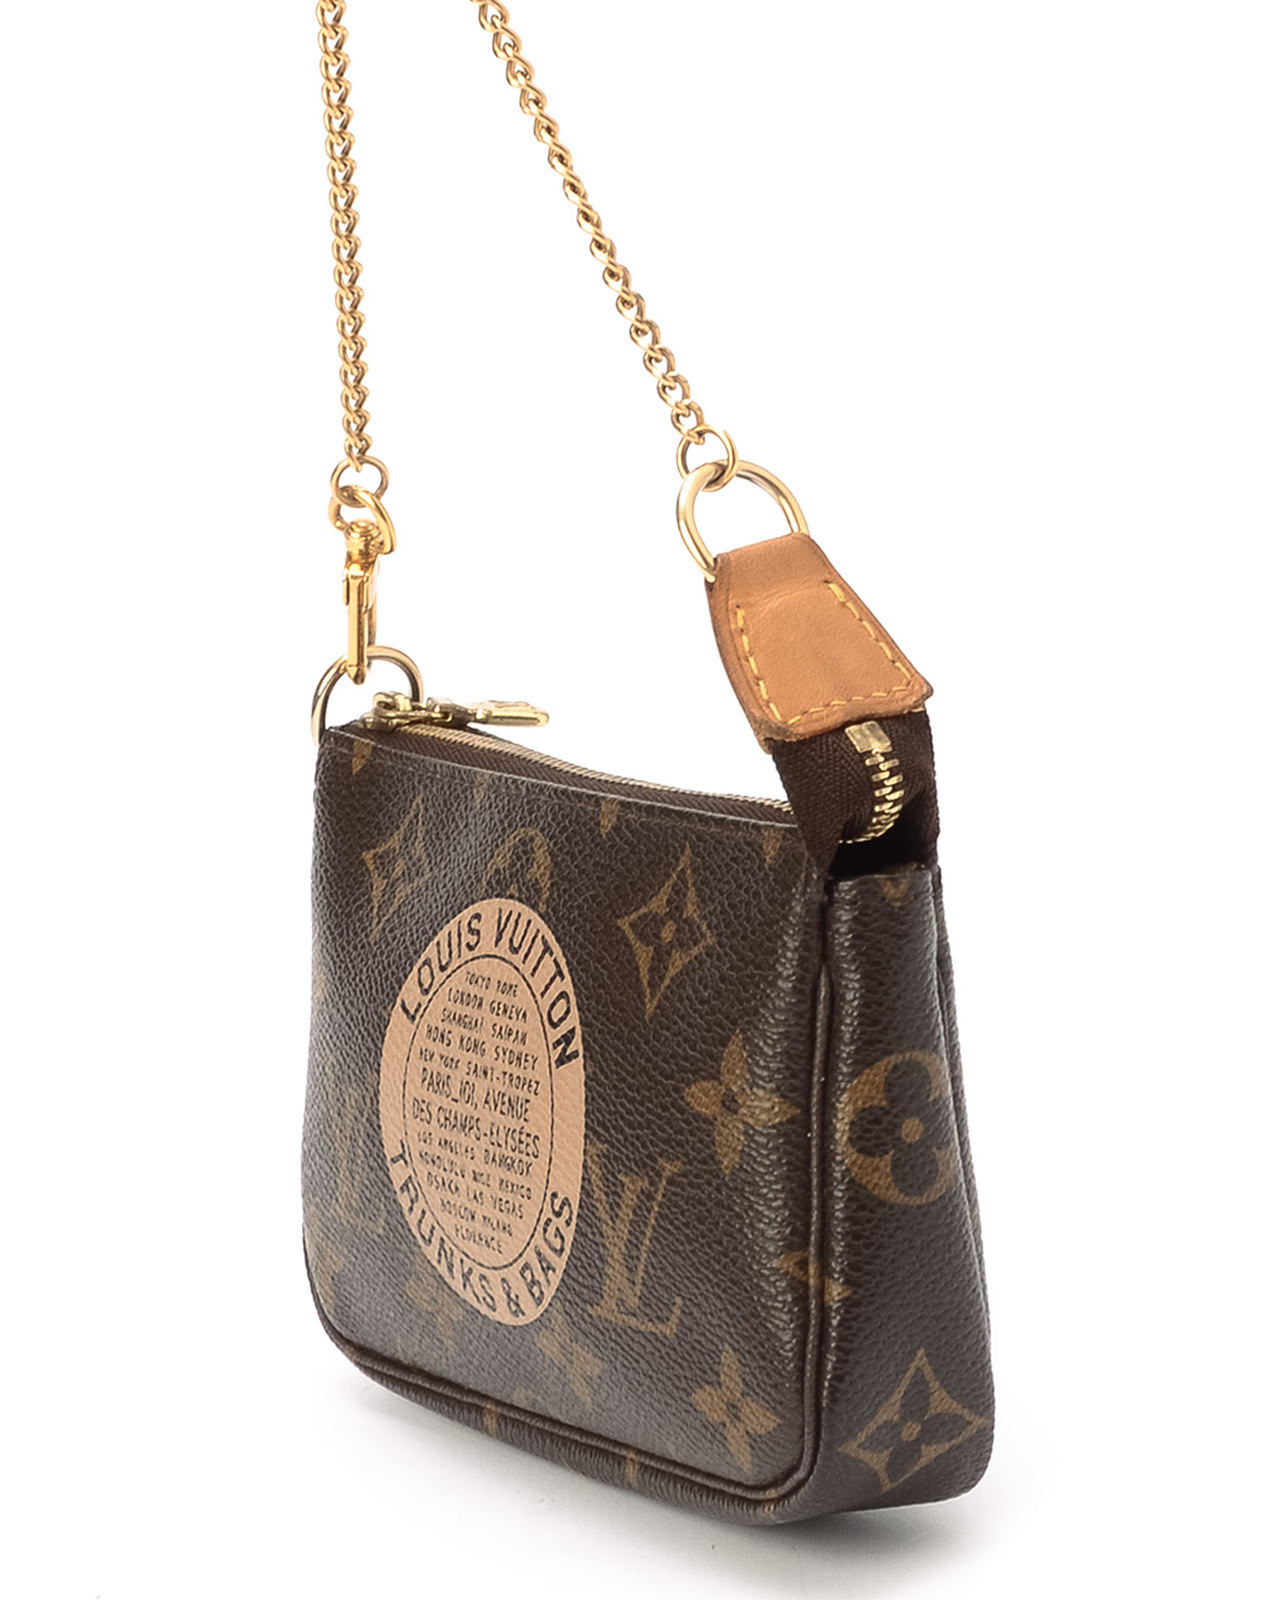 Lyst - Louis Vuitton Monogram Mini Accessories Pouch in Brown